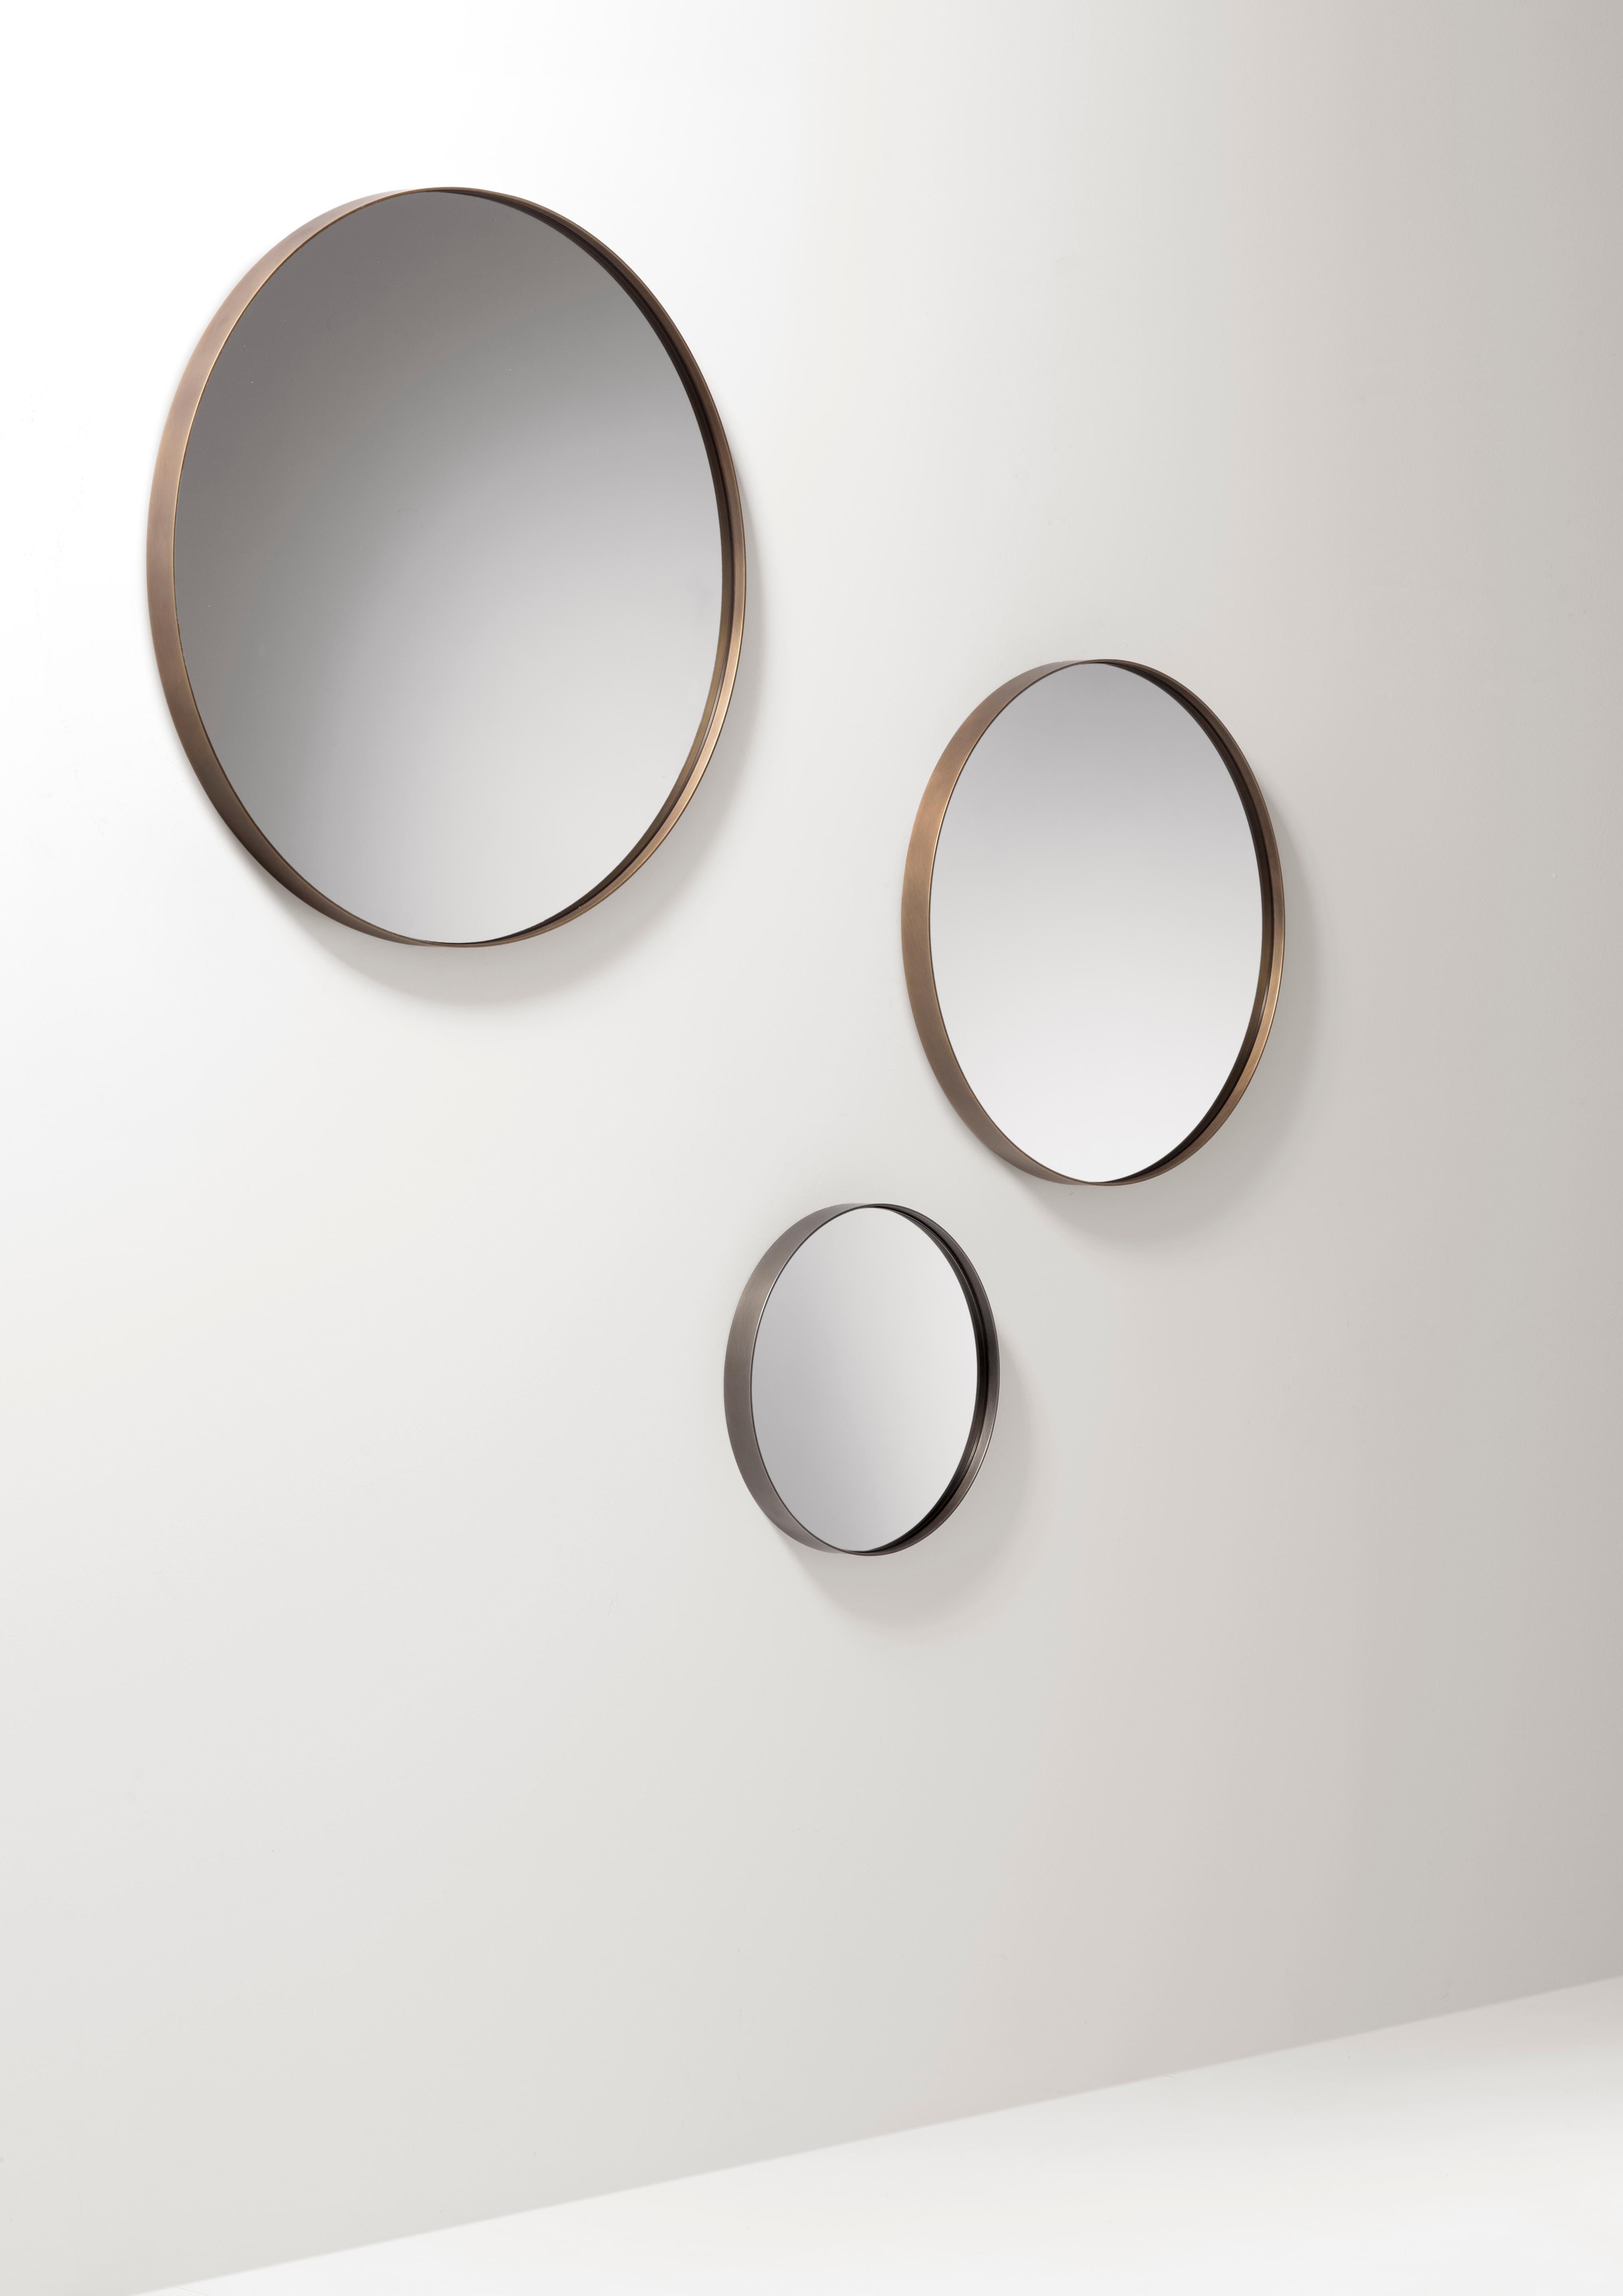 Modern DeCastelli Riflesso 90 Mirror with Brass Frame by R&D De Castelli For Sale